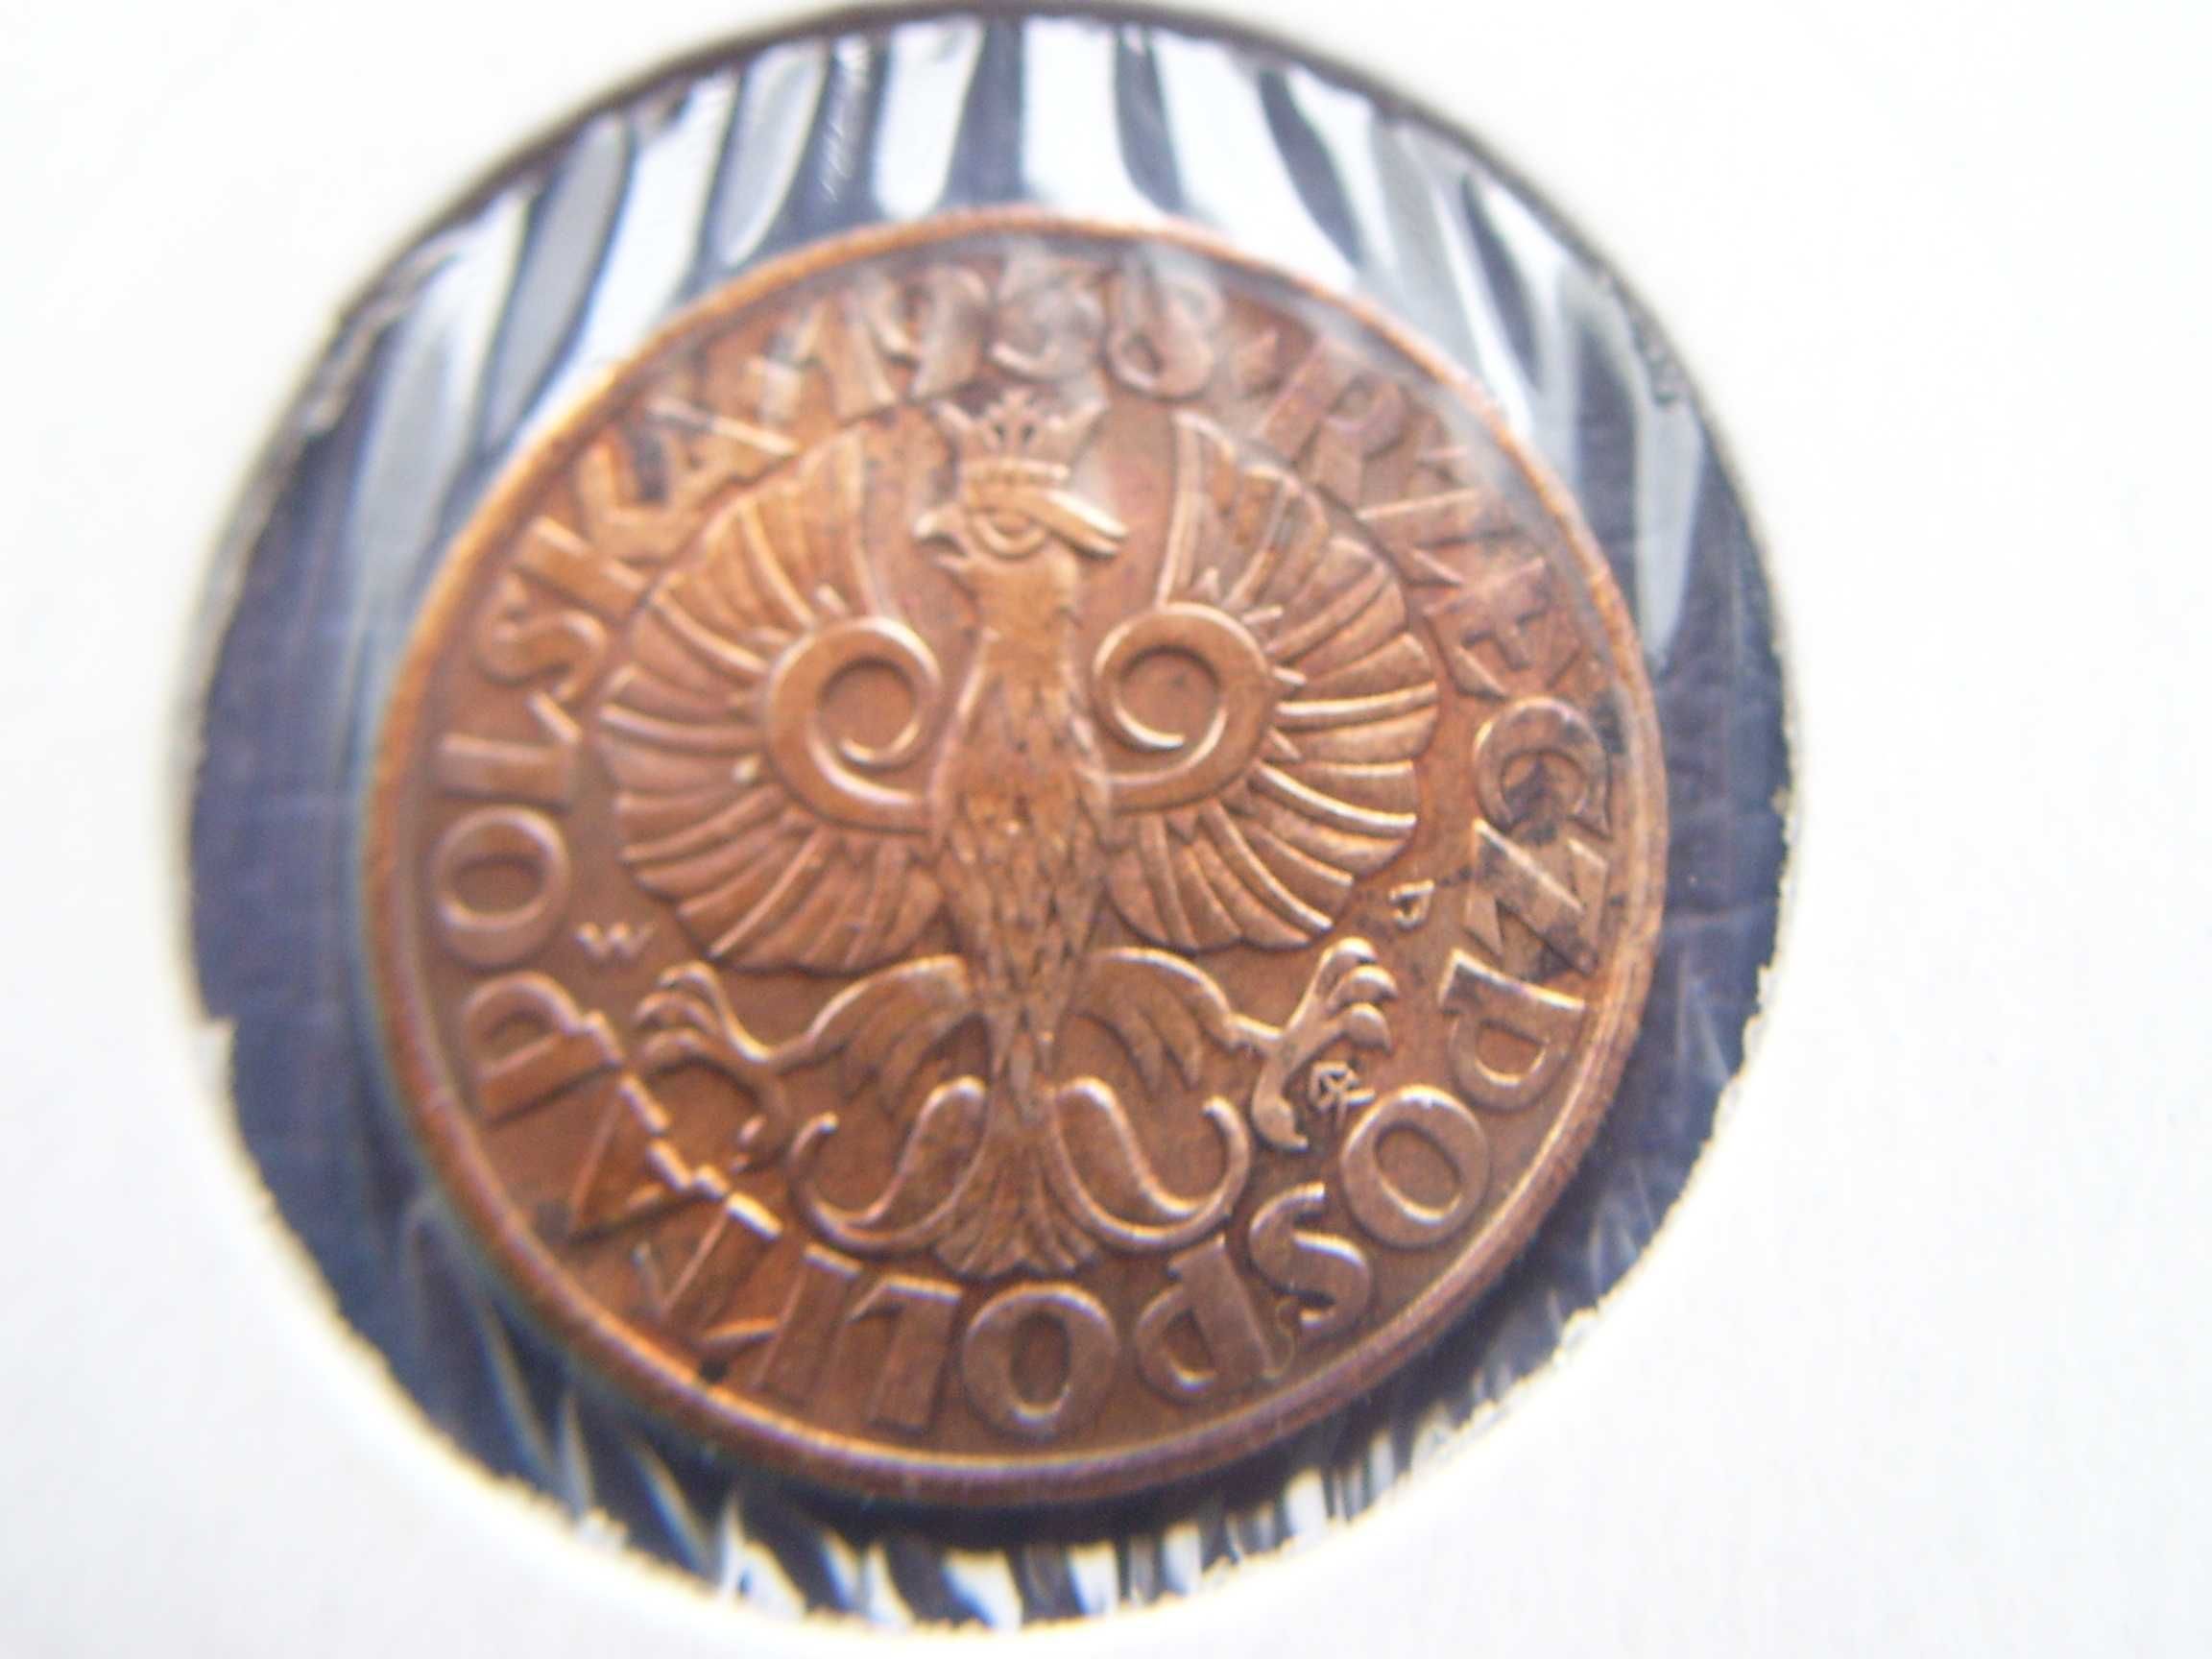 Stare monety 5 groszy 1938 2RP